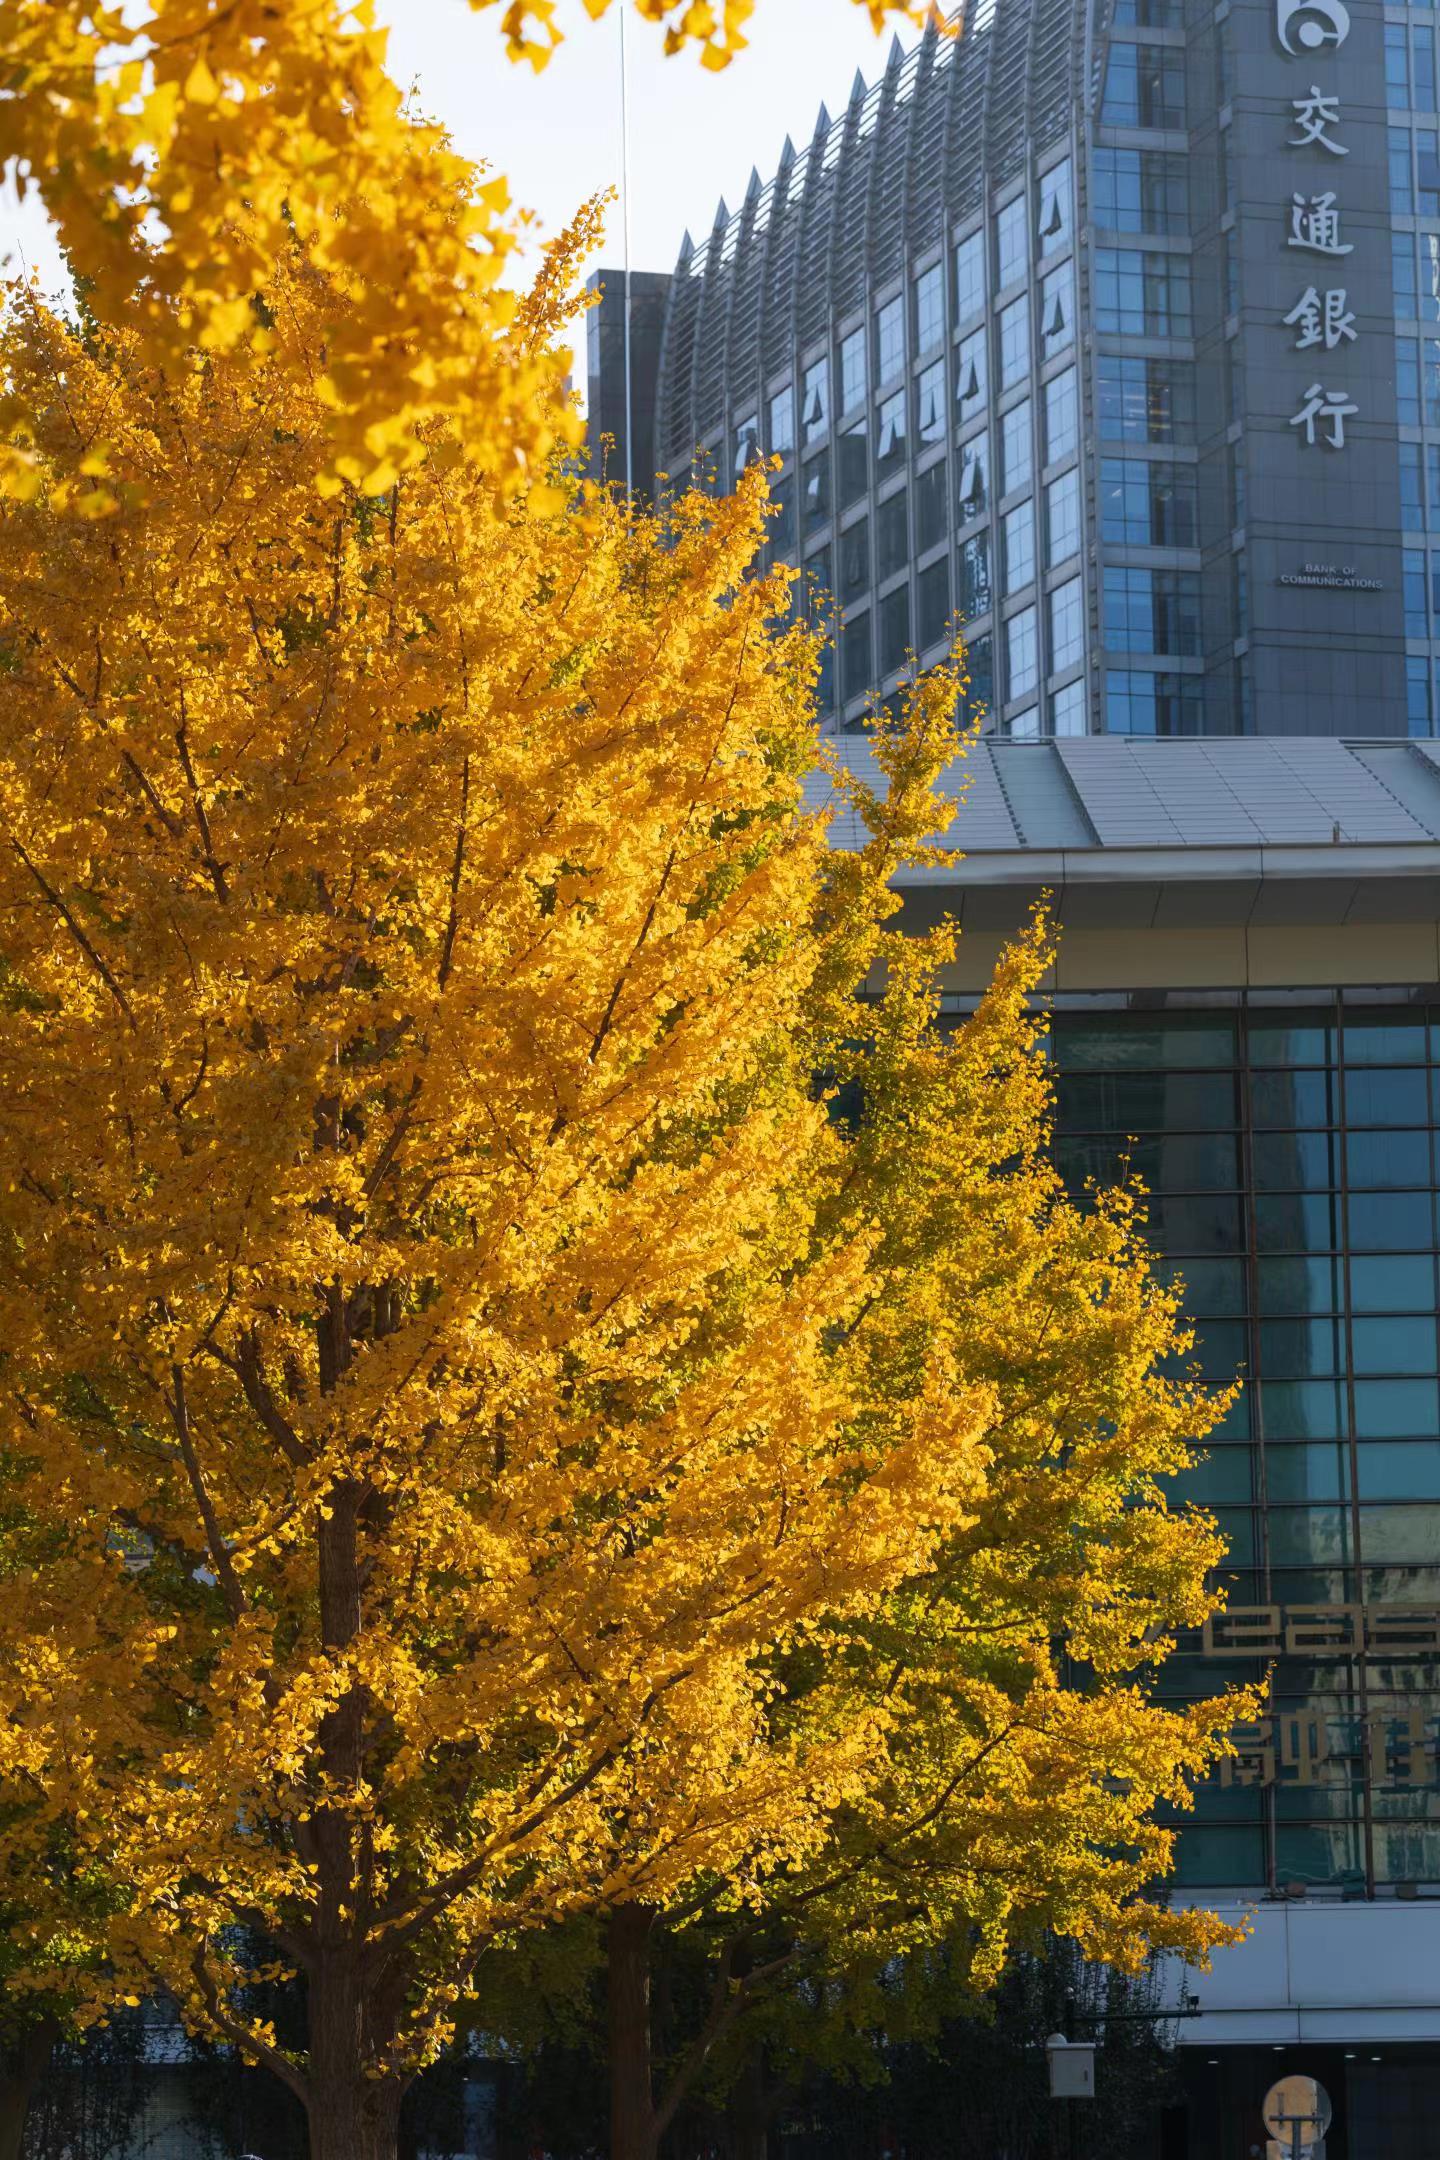 Golden ginkgo leaves in Beijing's financial center